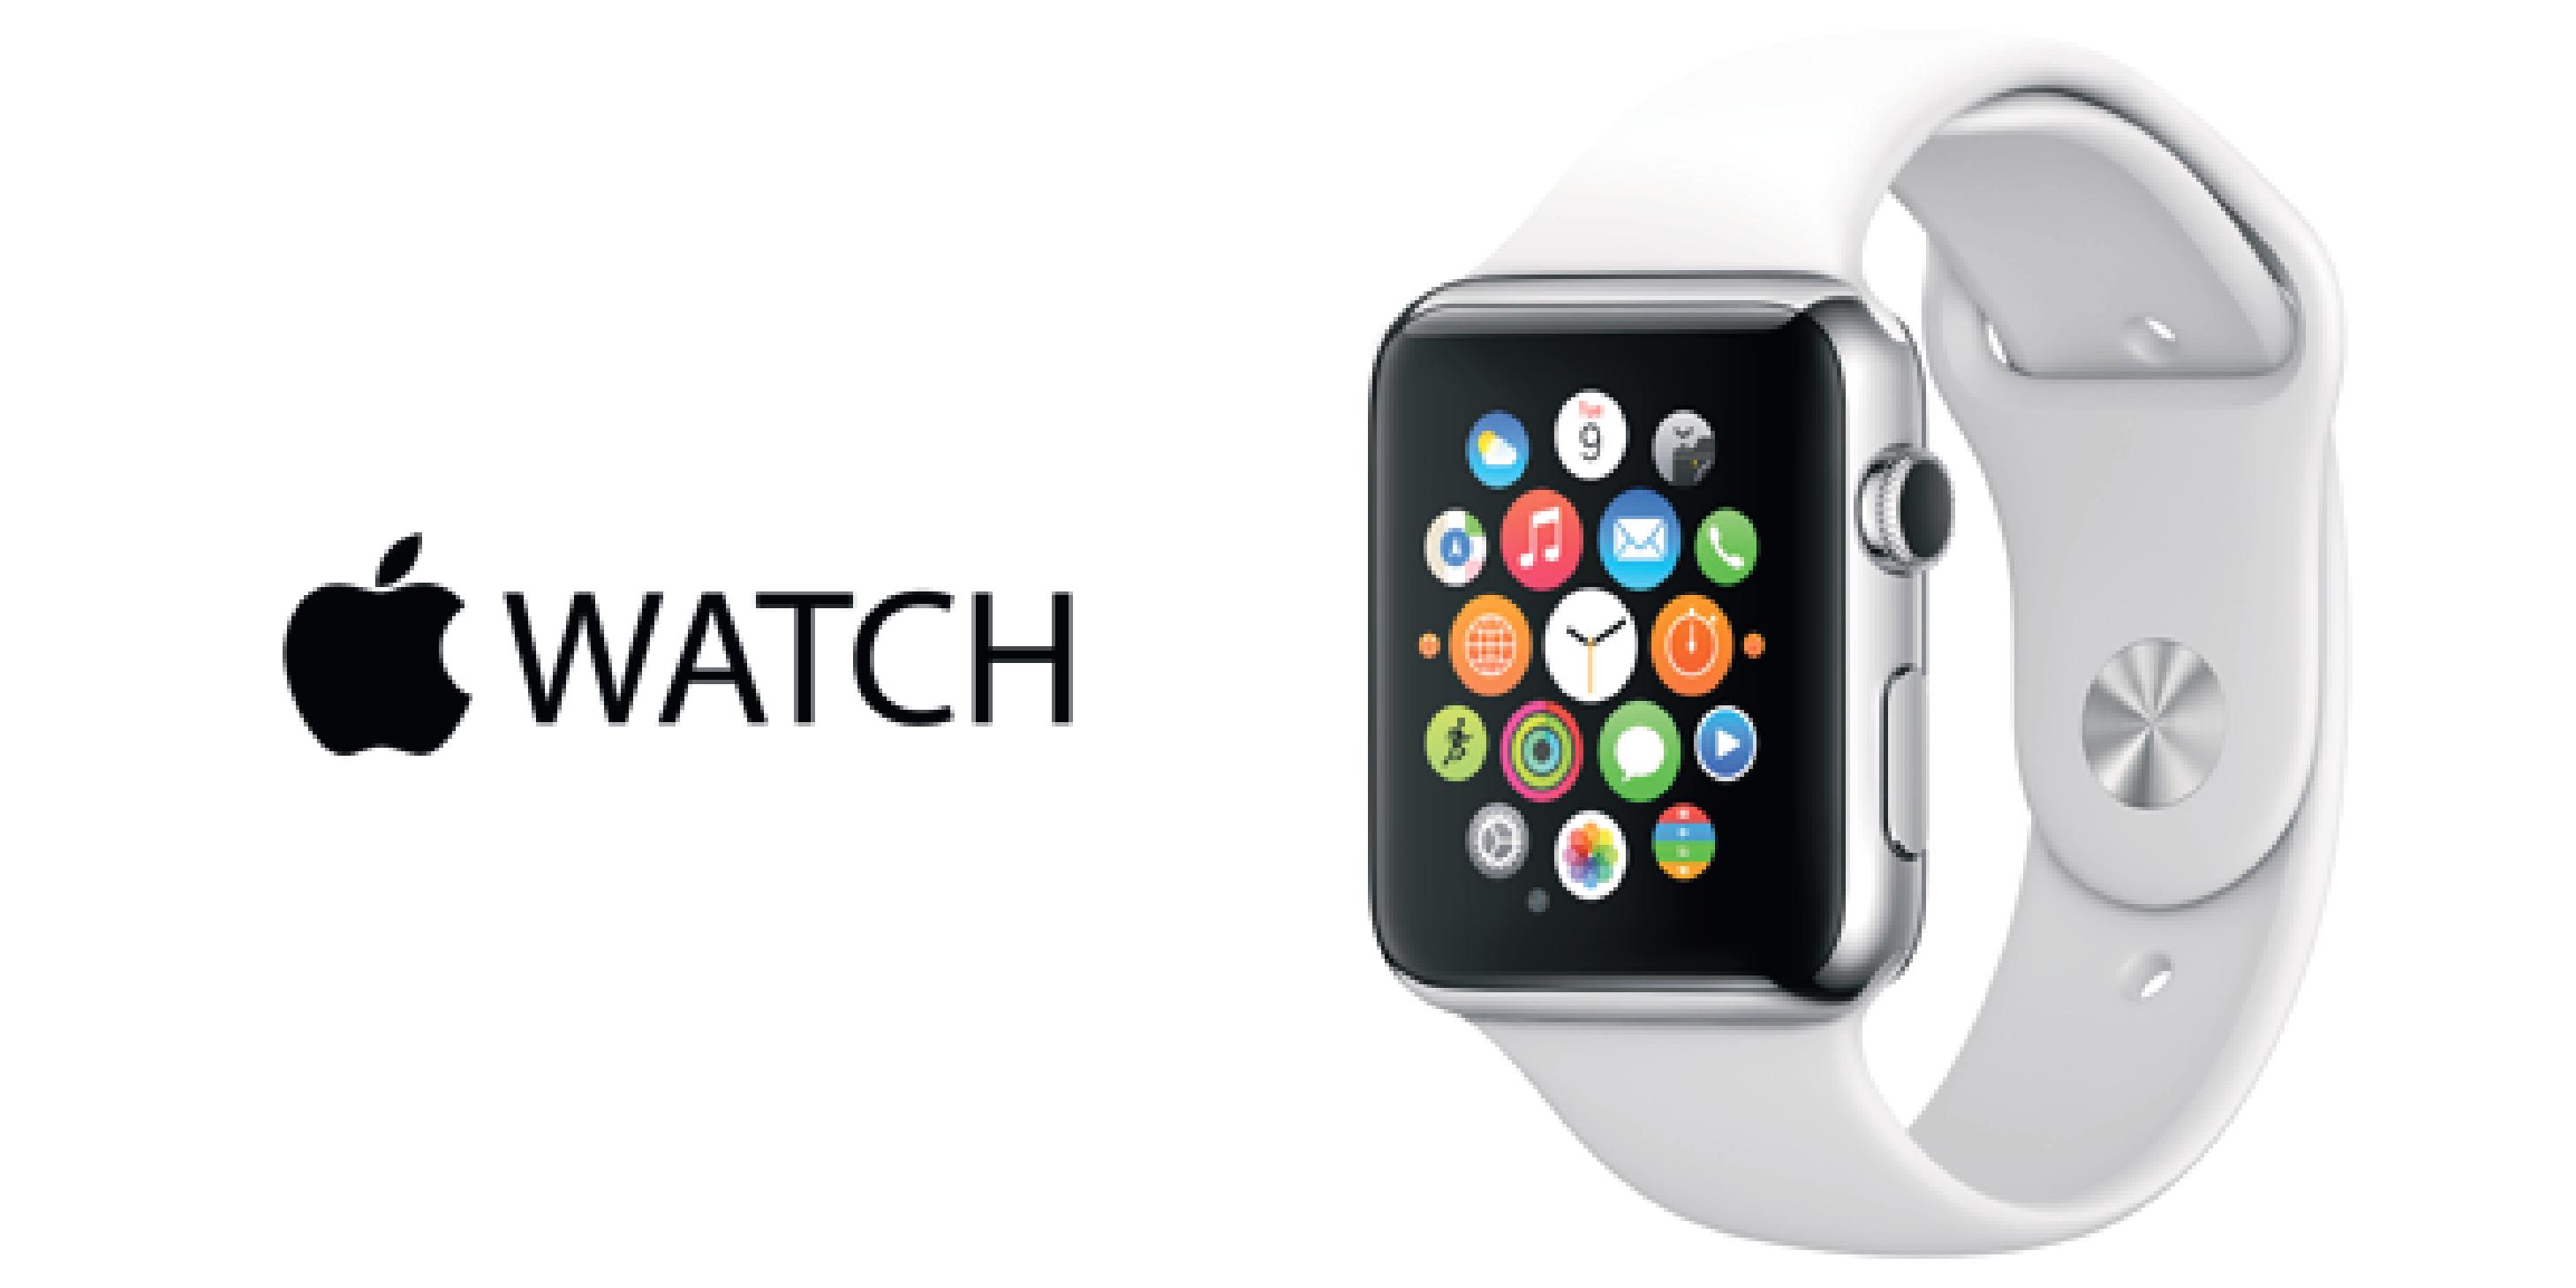 Nuovo Apple Watch, Ive parla anche degli iPhone